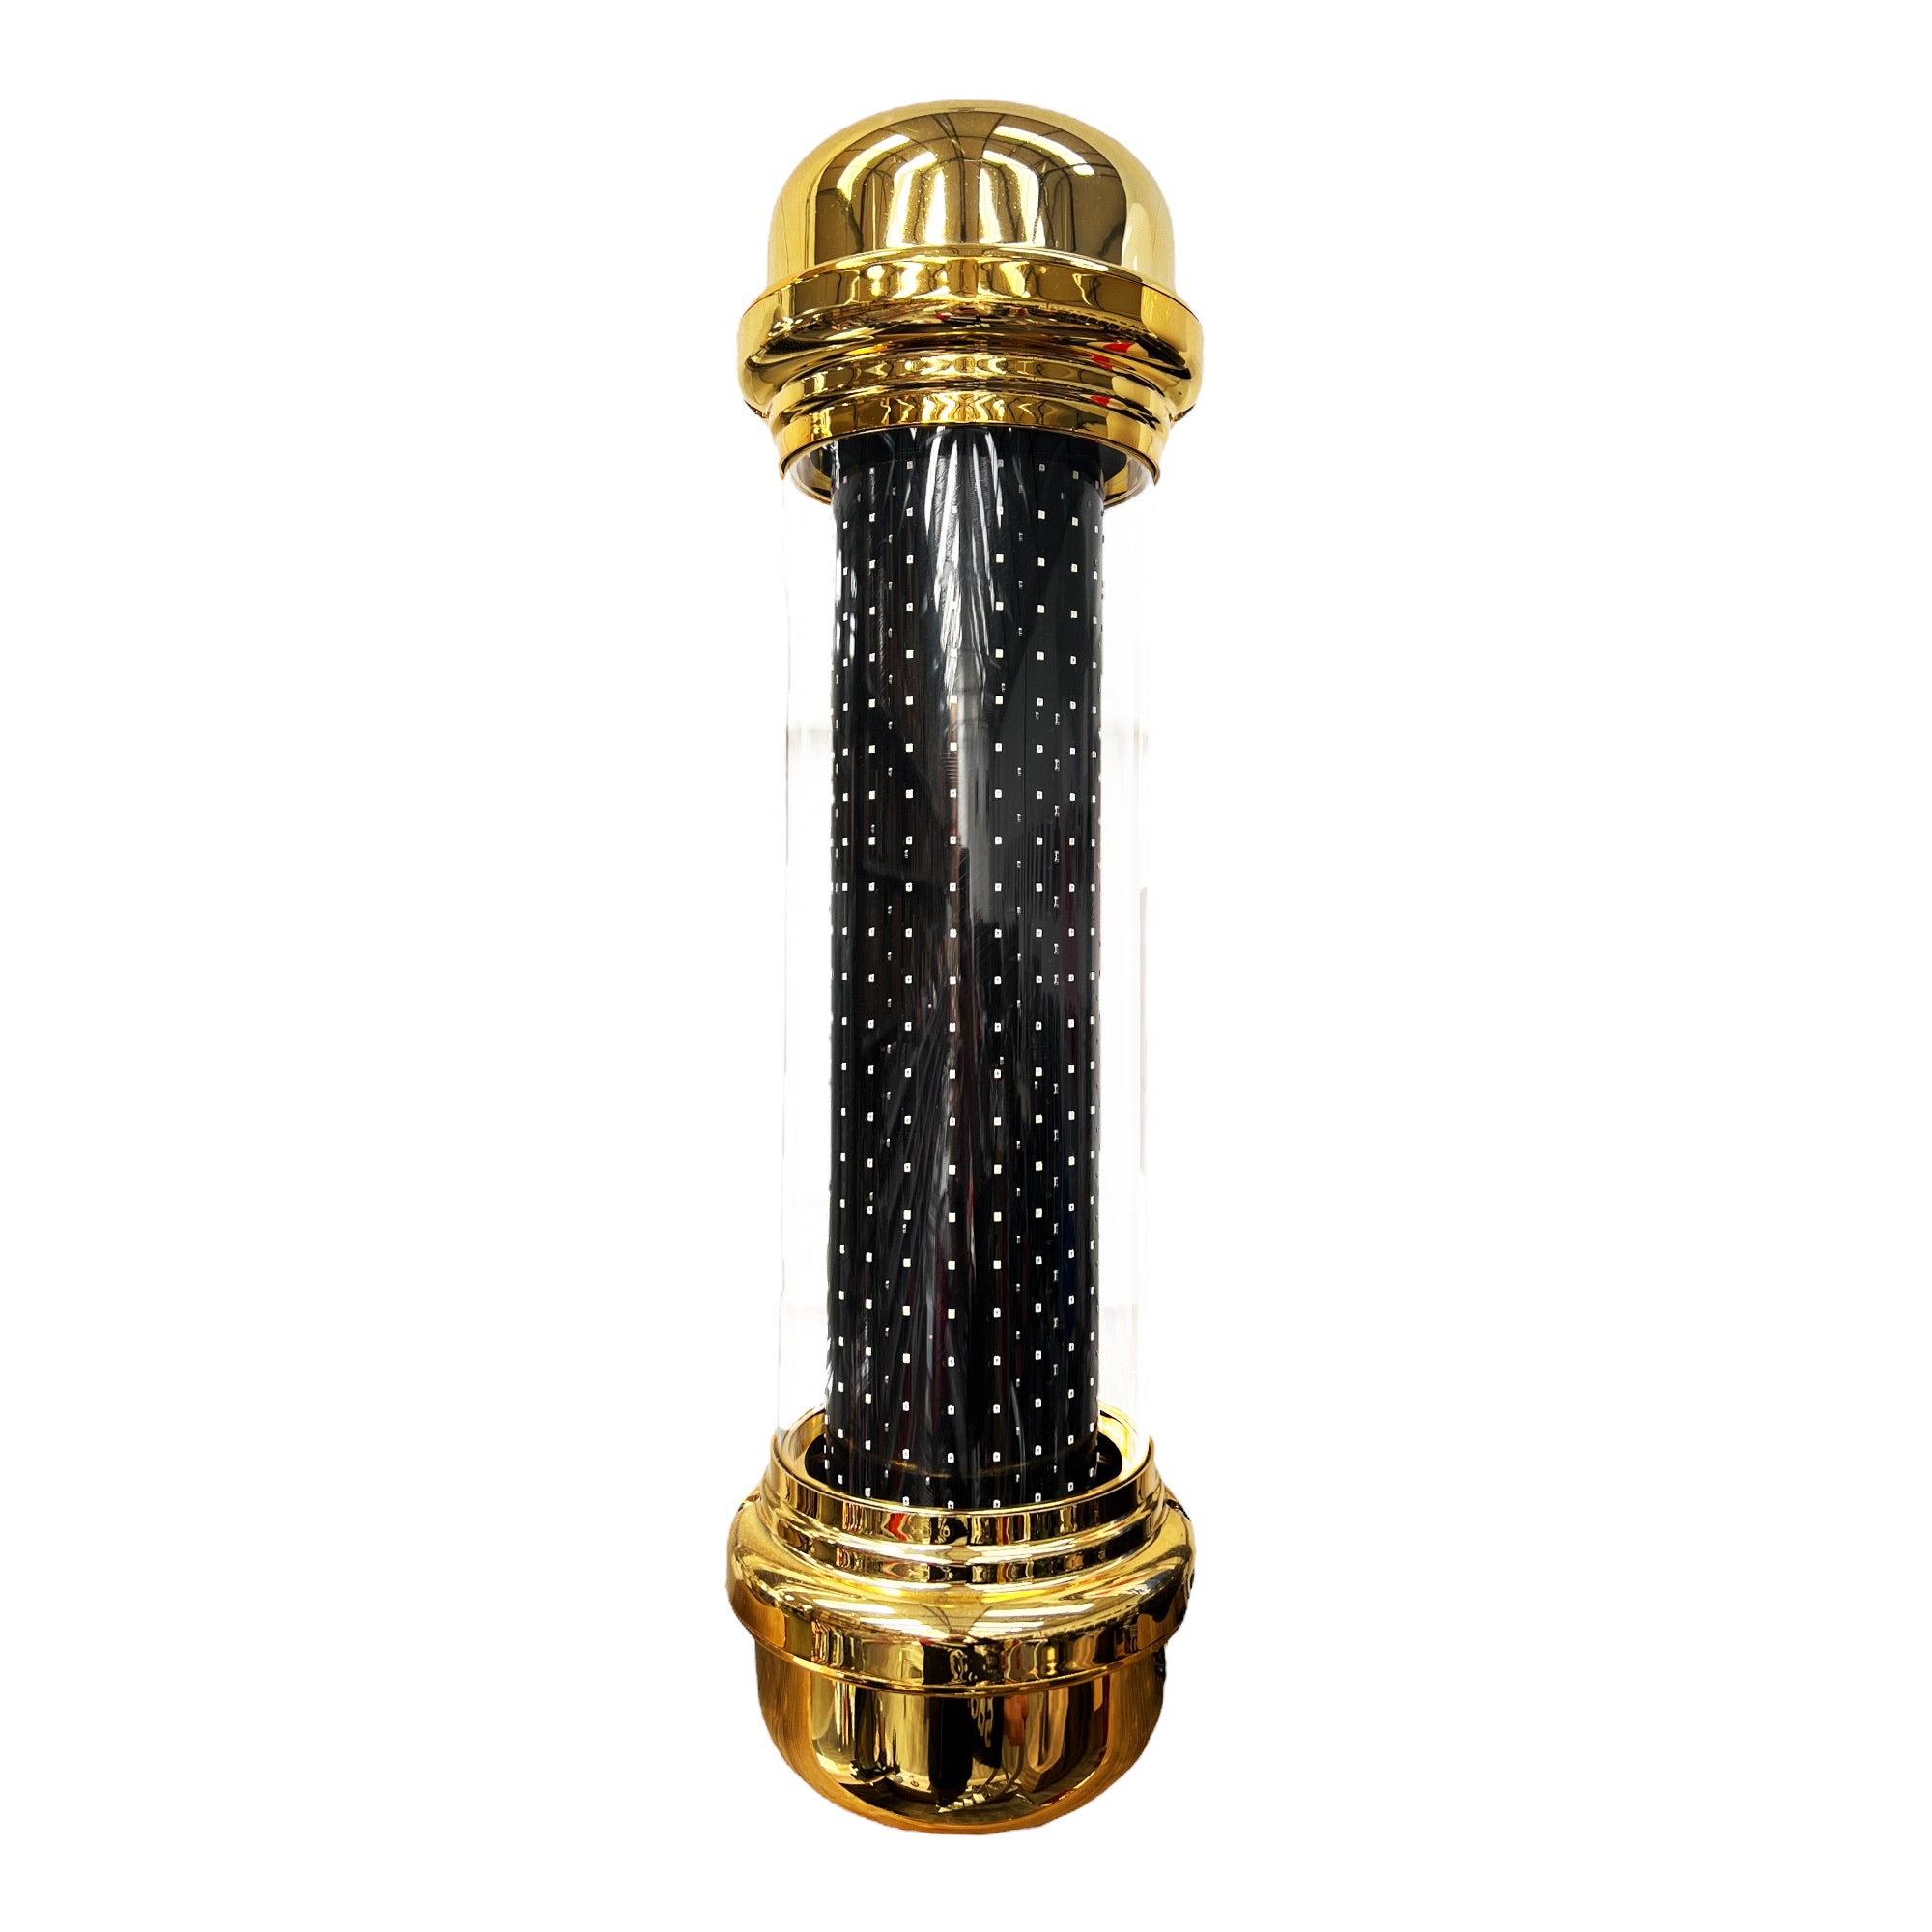 Gabri - Barber Pole Led Light 5 Modes With Remote Control (Gold) 70cm